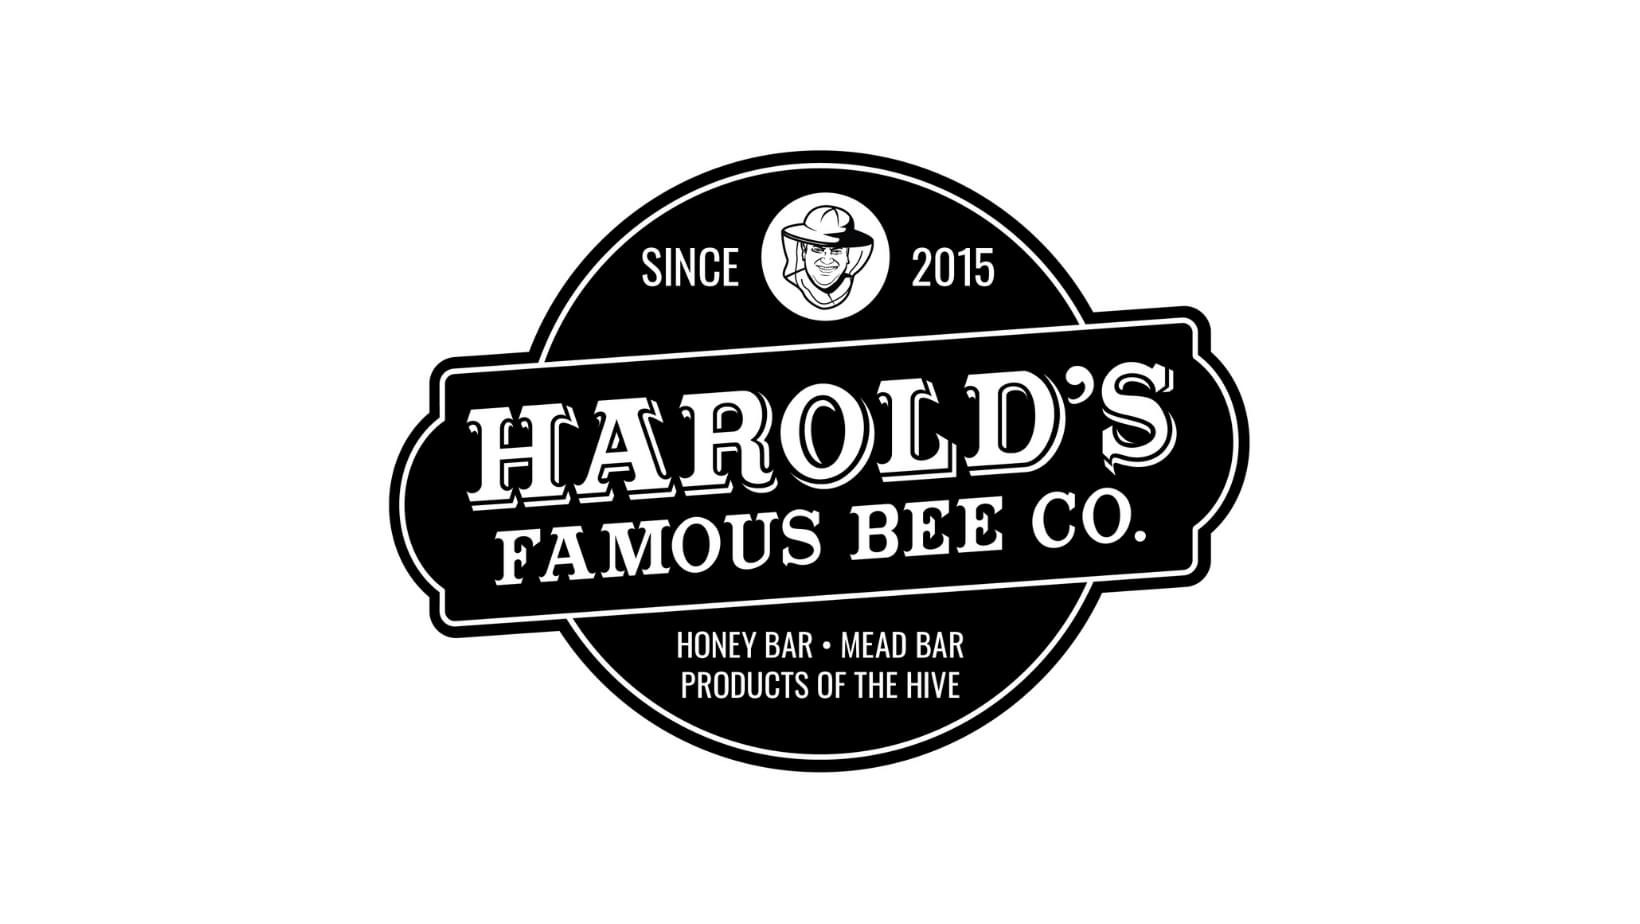 Harold's Famous Bee Co. logo 